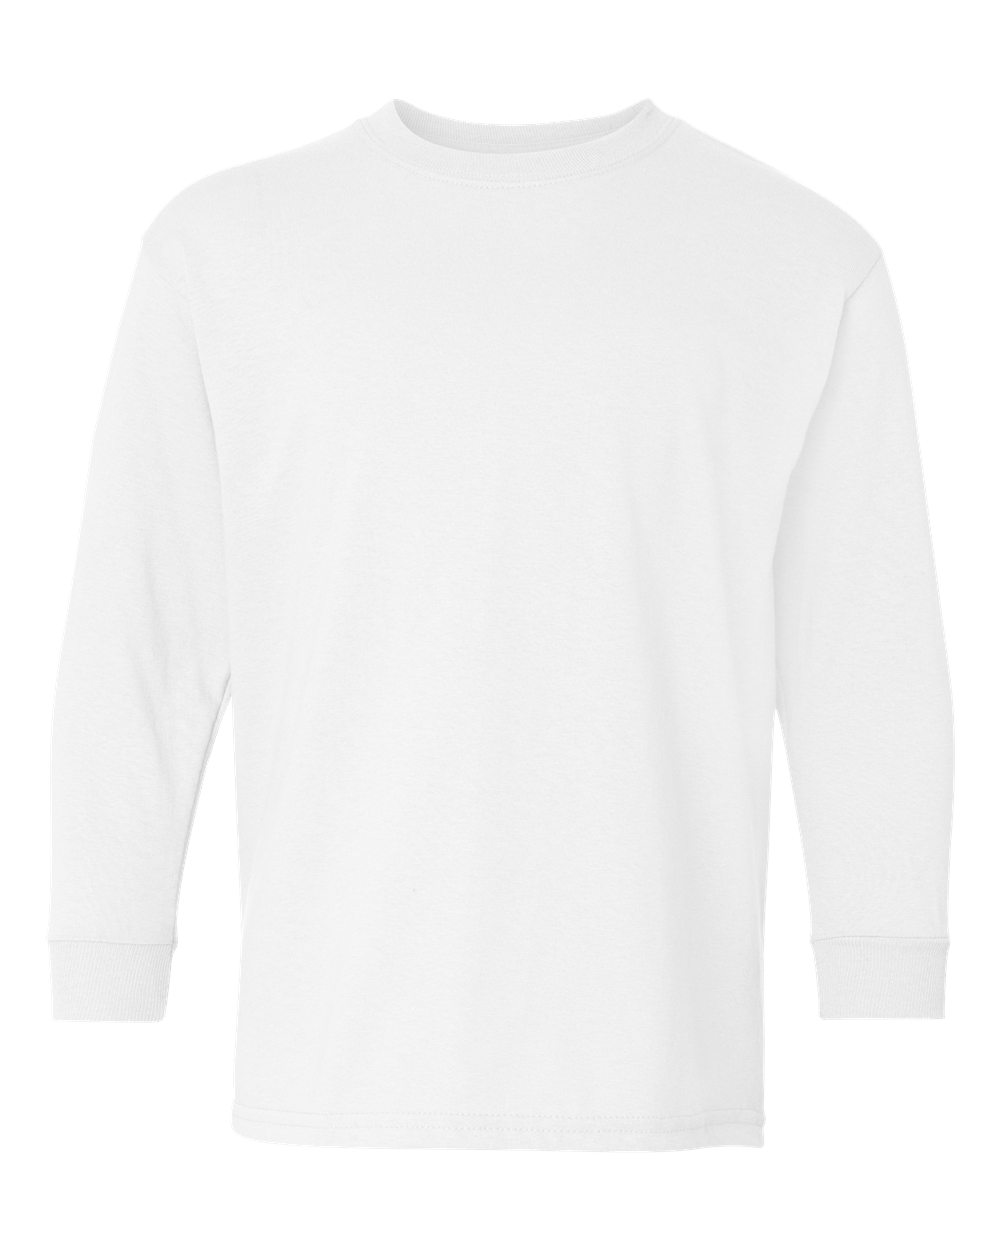 Gildan Youth Long Sleeve (5400b) in White